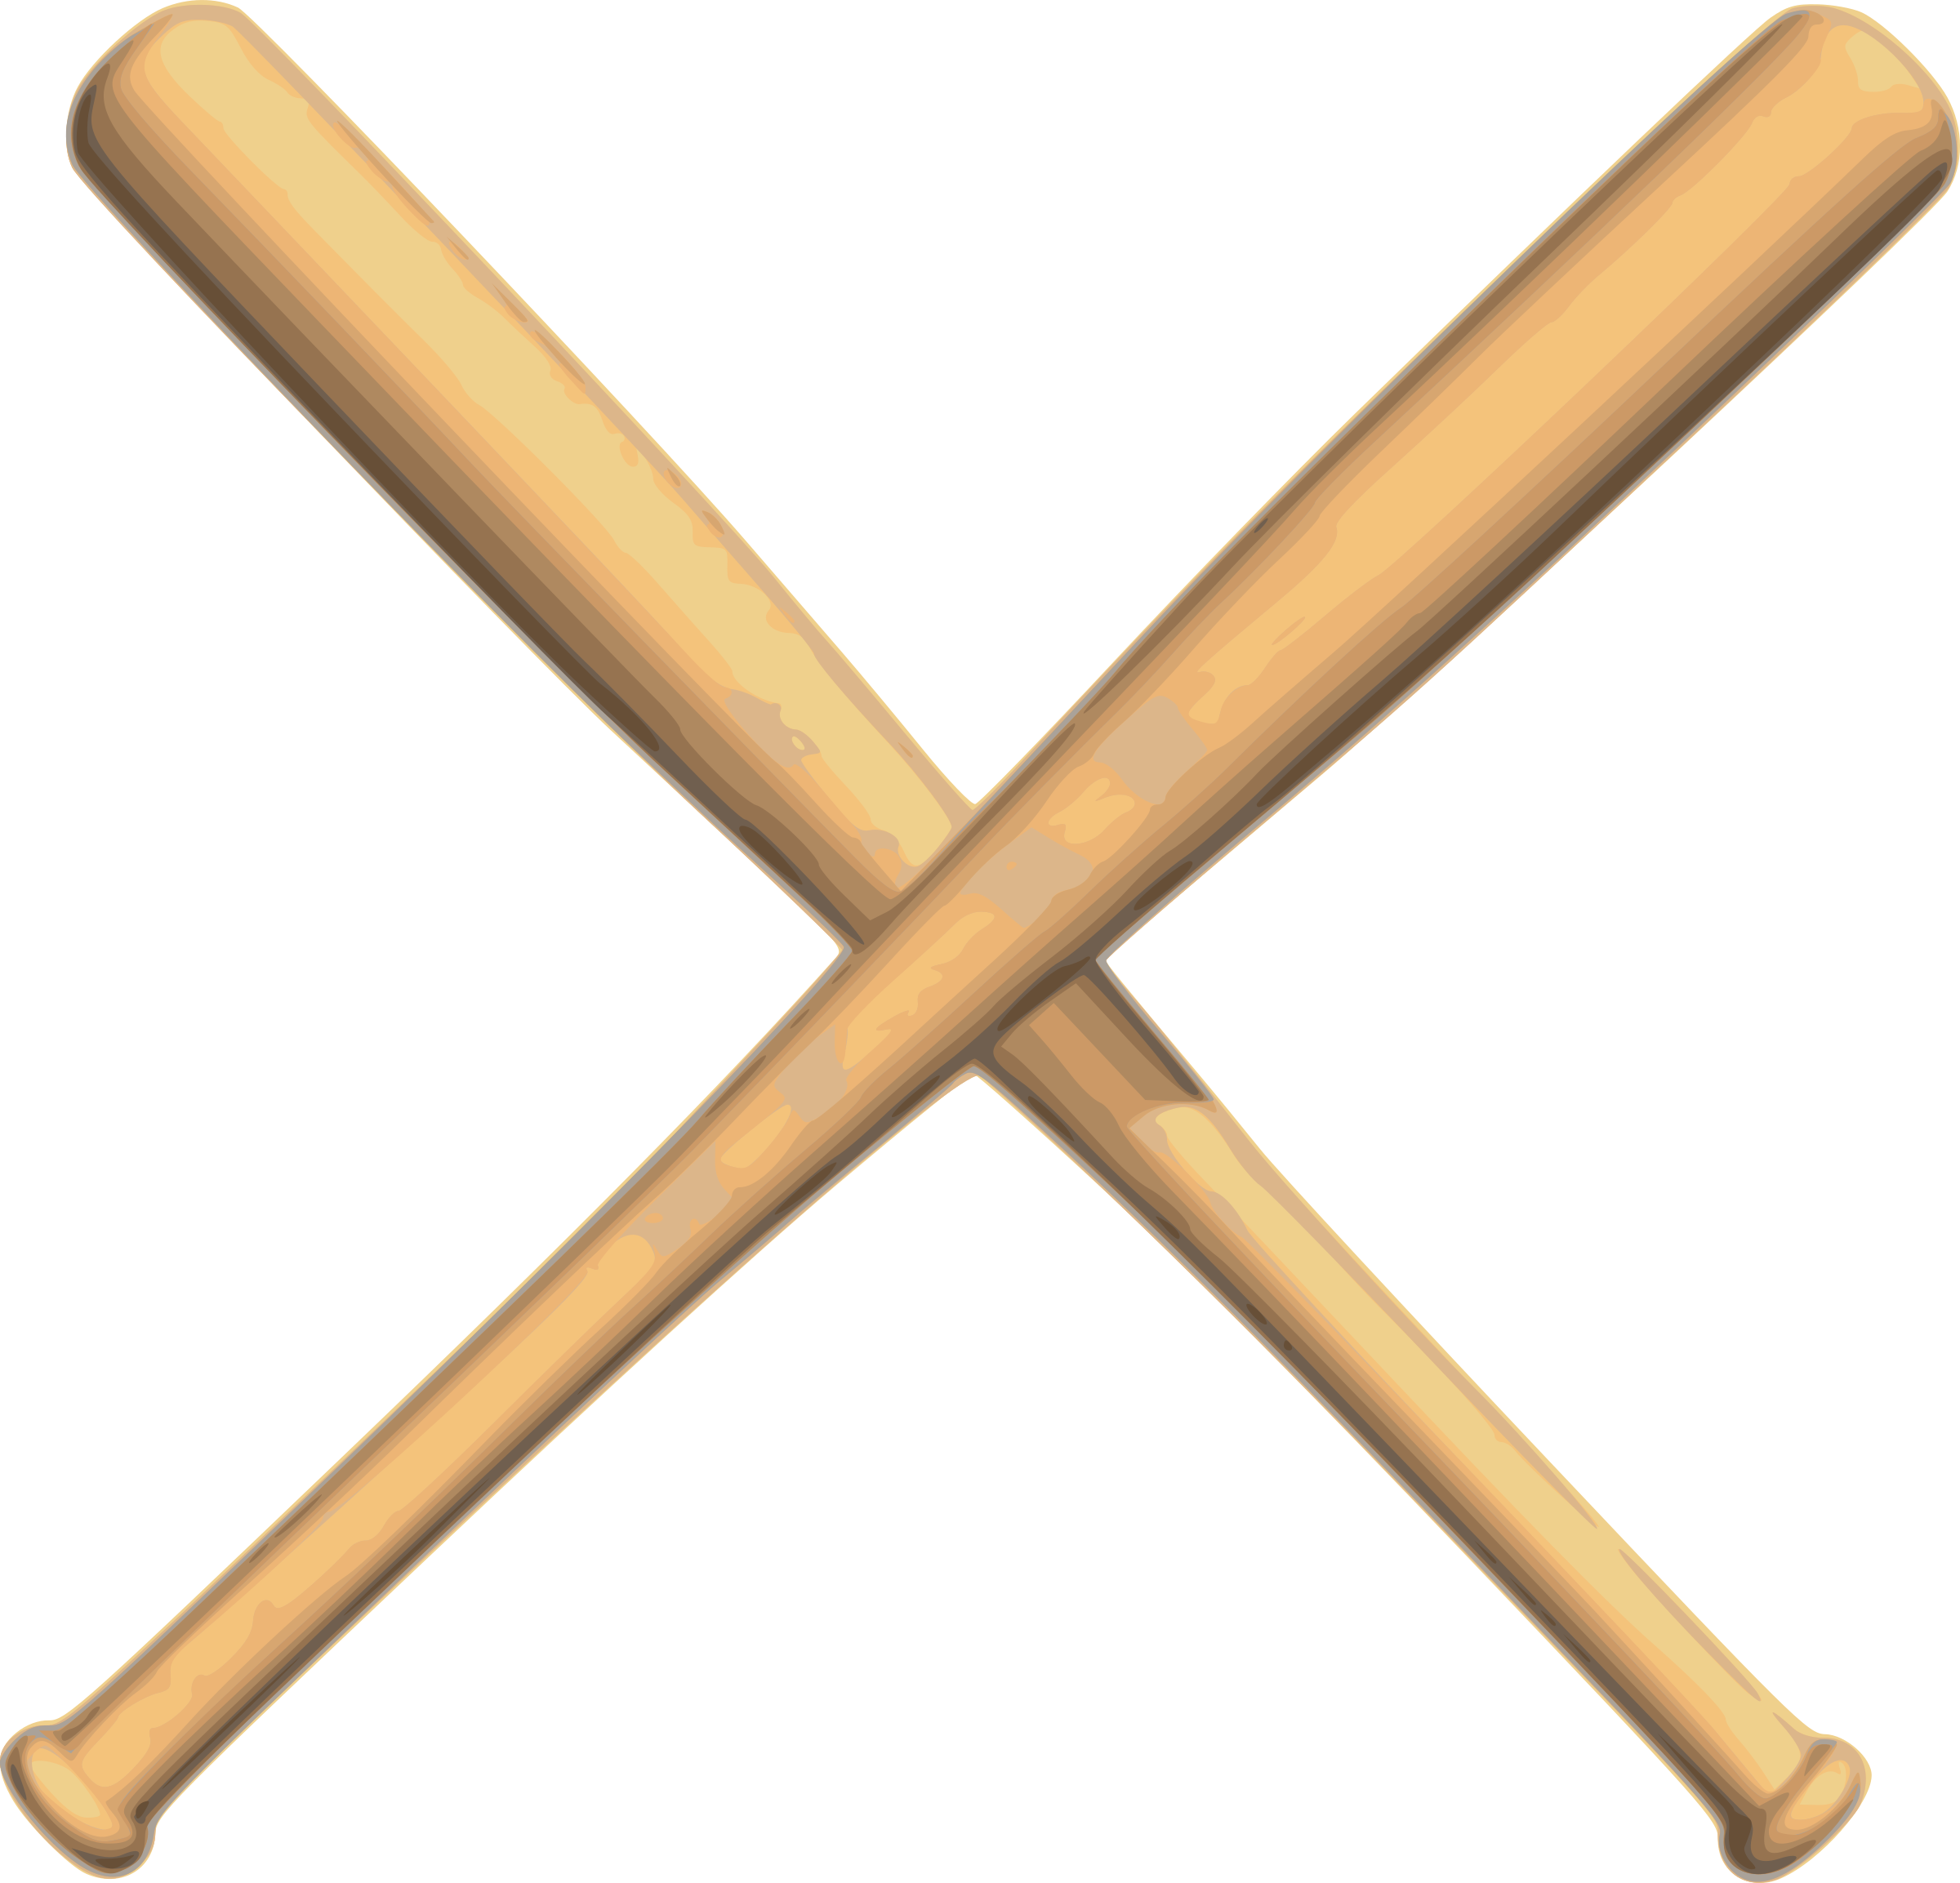 Baseball bat baseball crossed bats clipart.